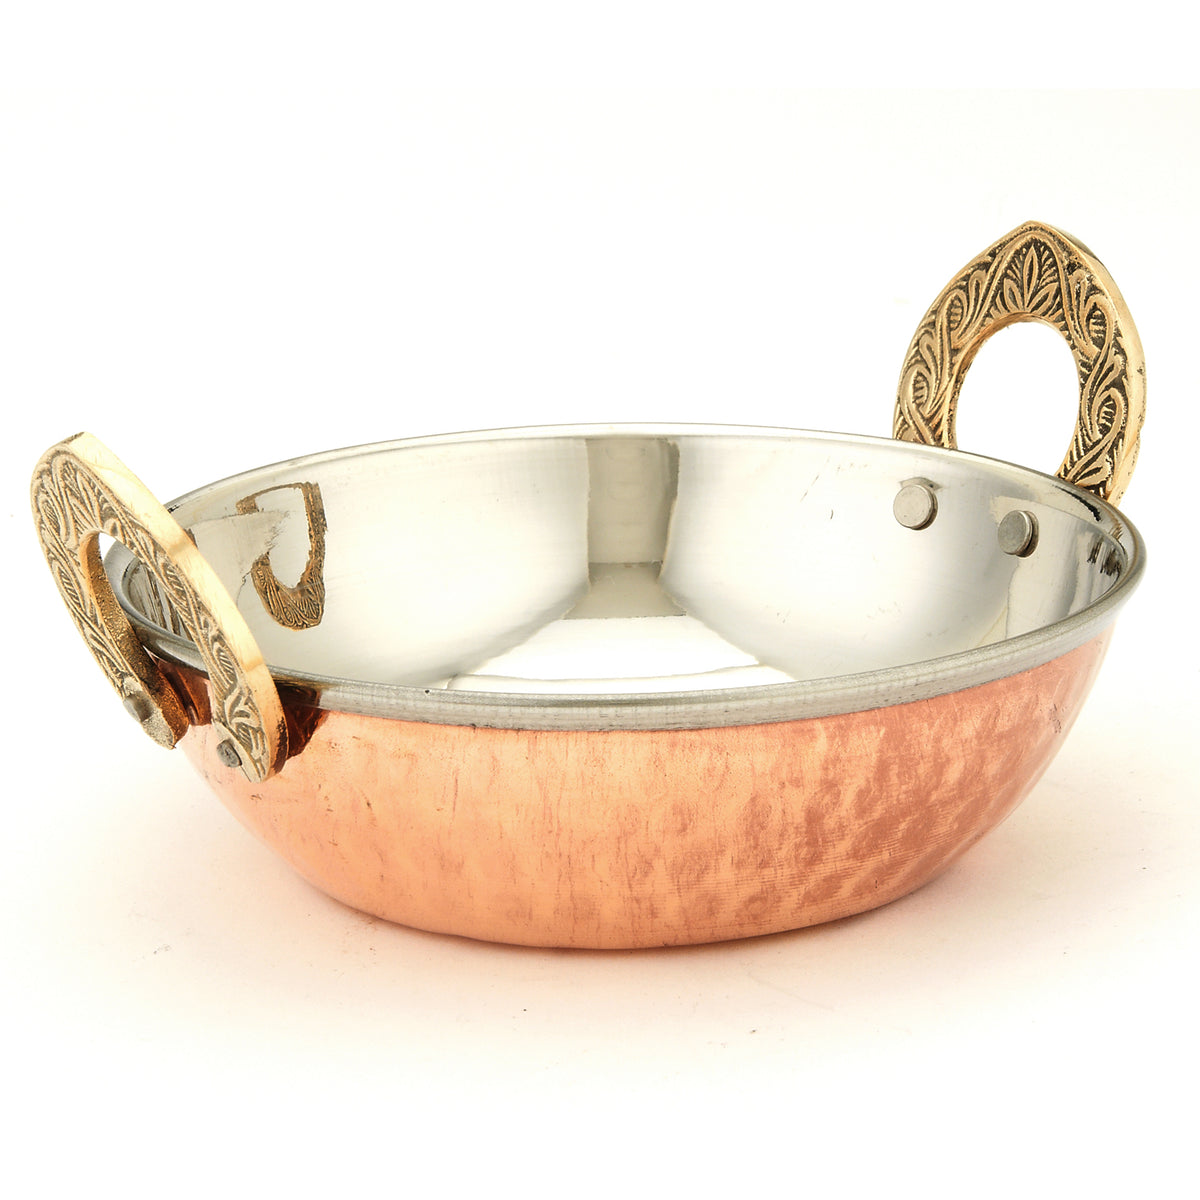 Copper/Stainless Steel Kadai serving bowl # 1 - 12 Oz. — Nishi Enterprise  Inc